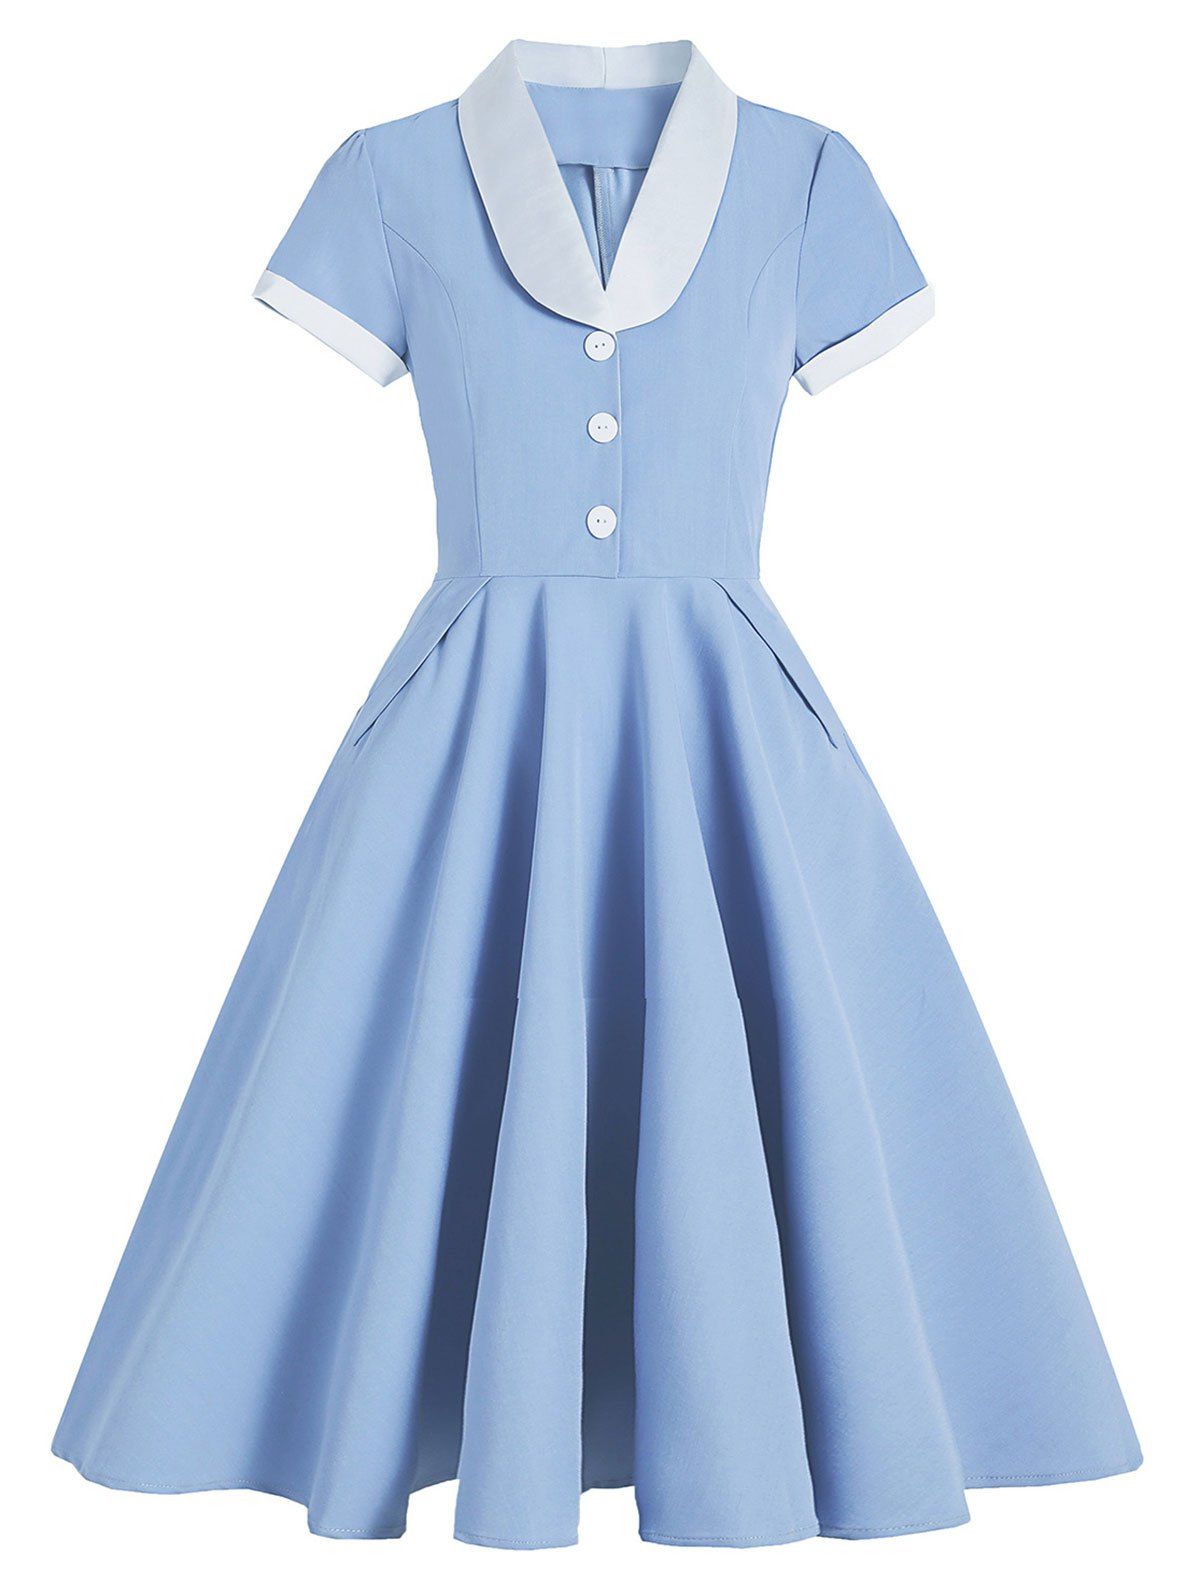 Colorblock Mock Button Rolled Cuff Pocket Dress - LIGHT BLUE L